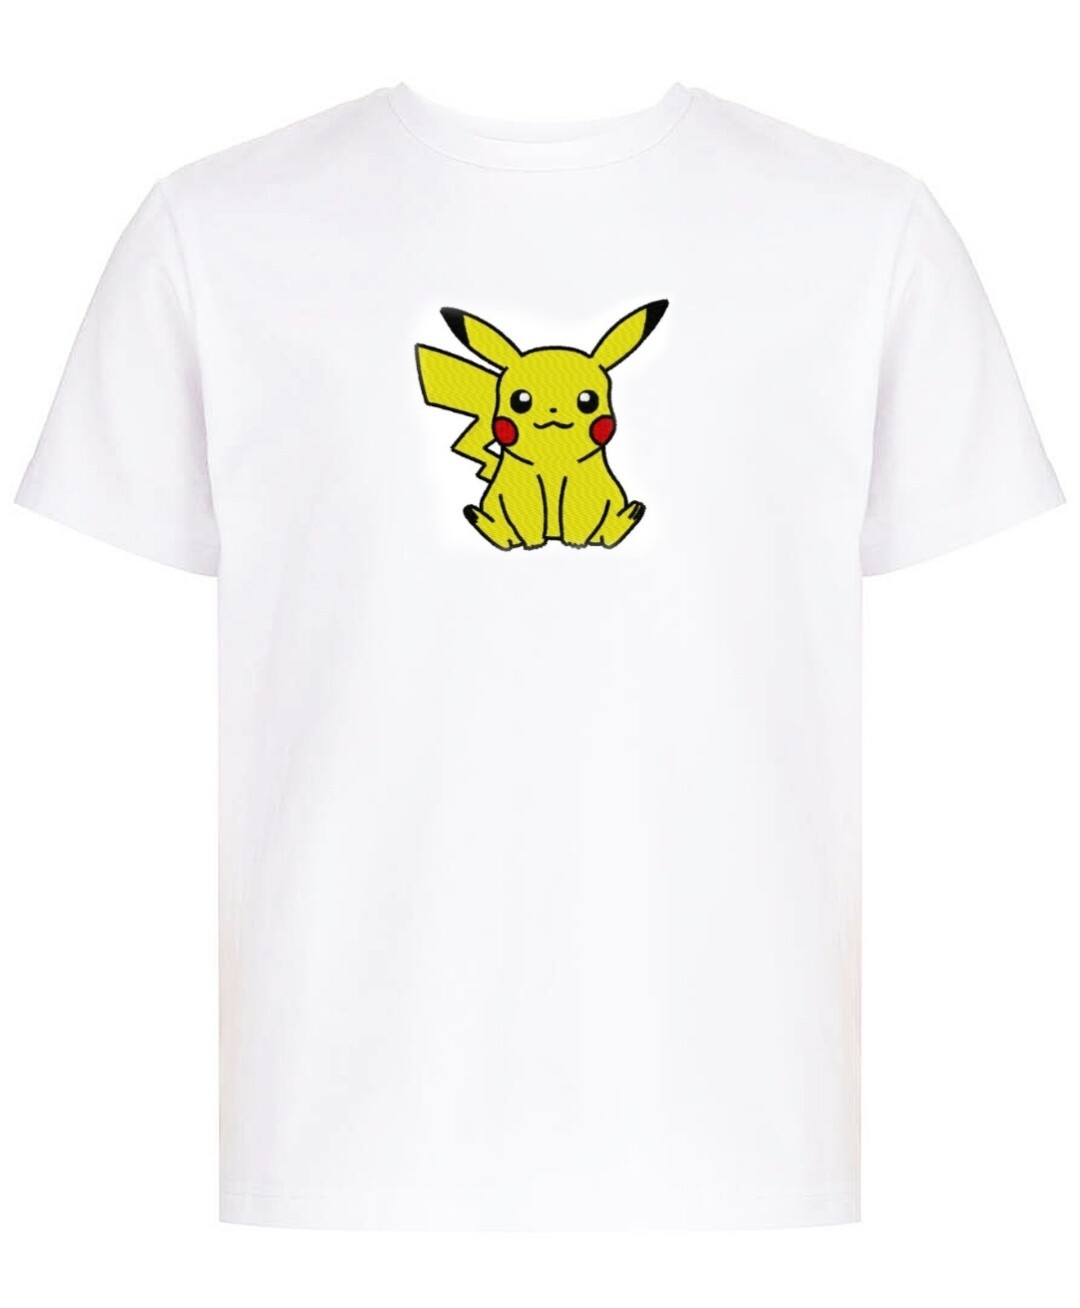 Футболка "Pikachu" XL белая